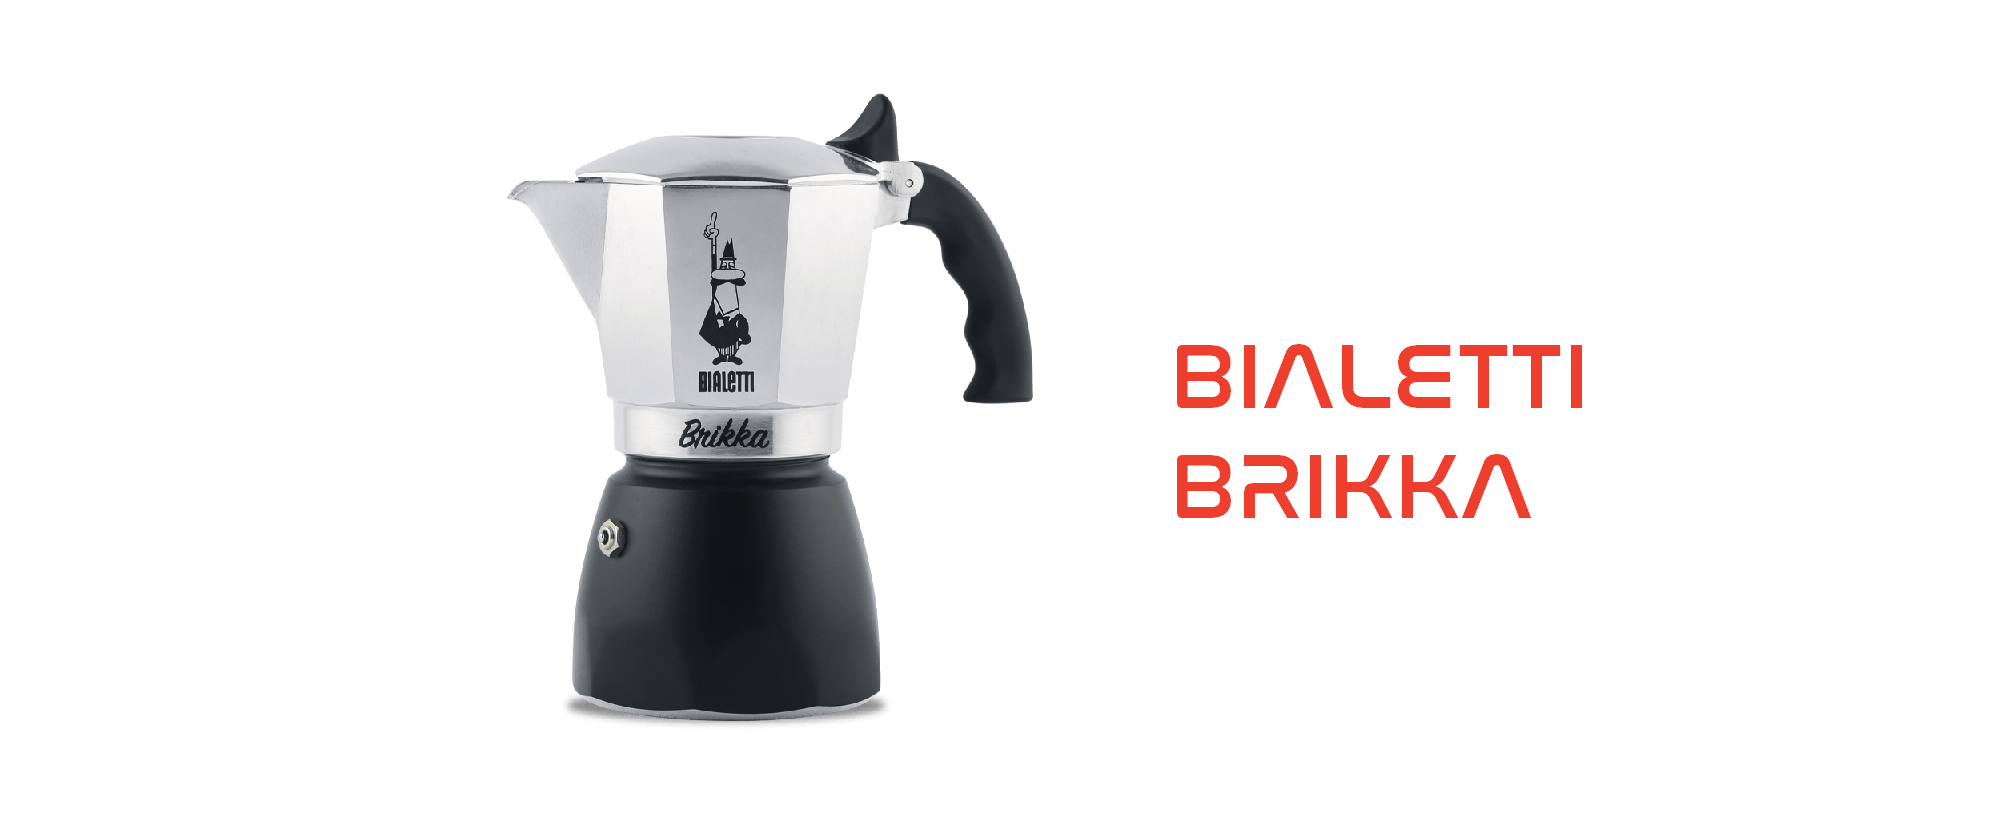 Bialetti BRIKKA Espresso Maker - HOW TO MAKE THE BEST CREMA - Coffee 4 All